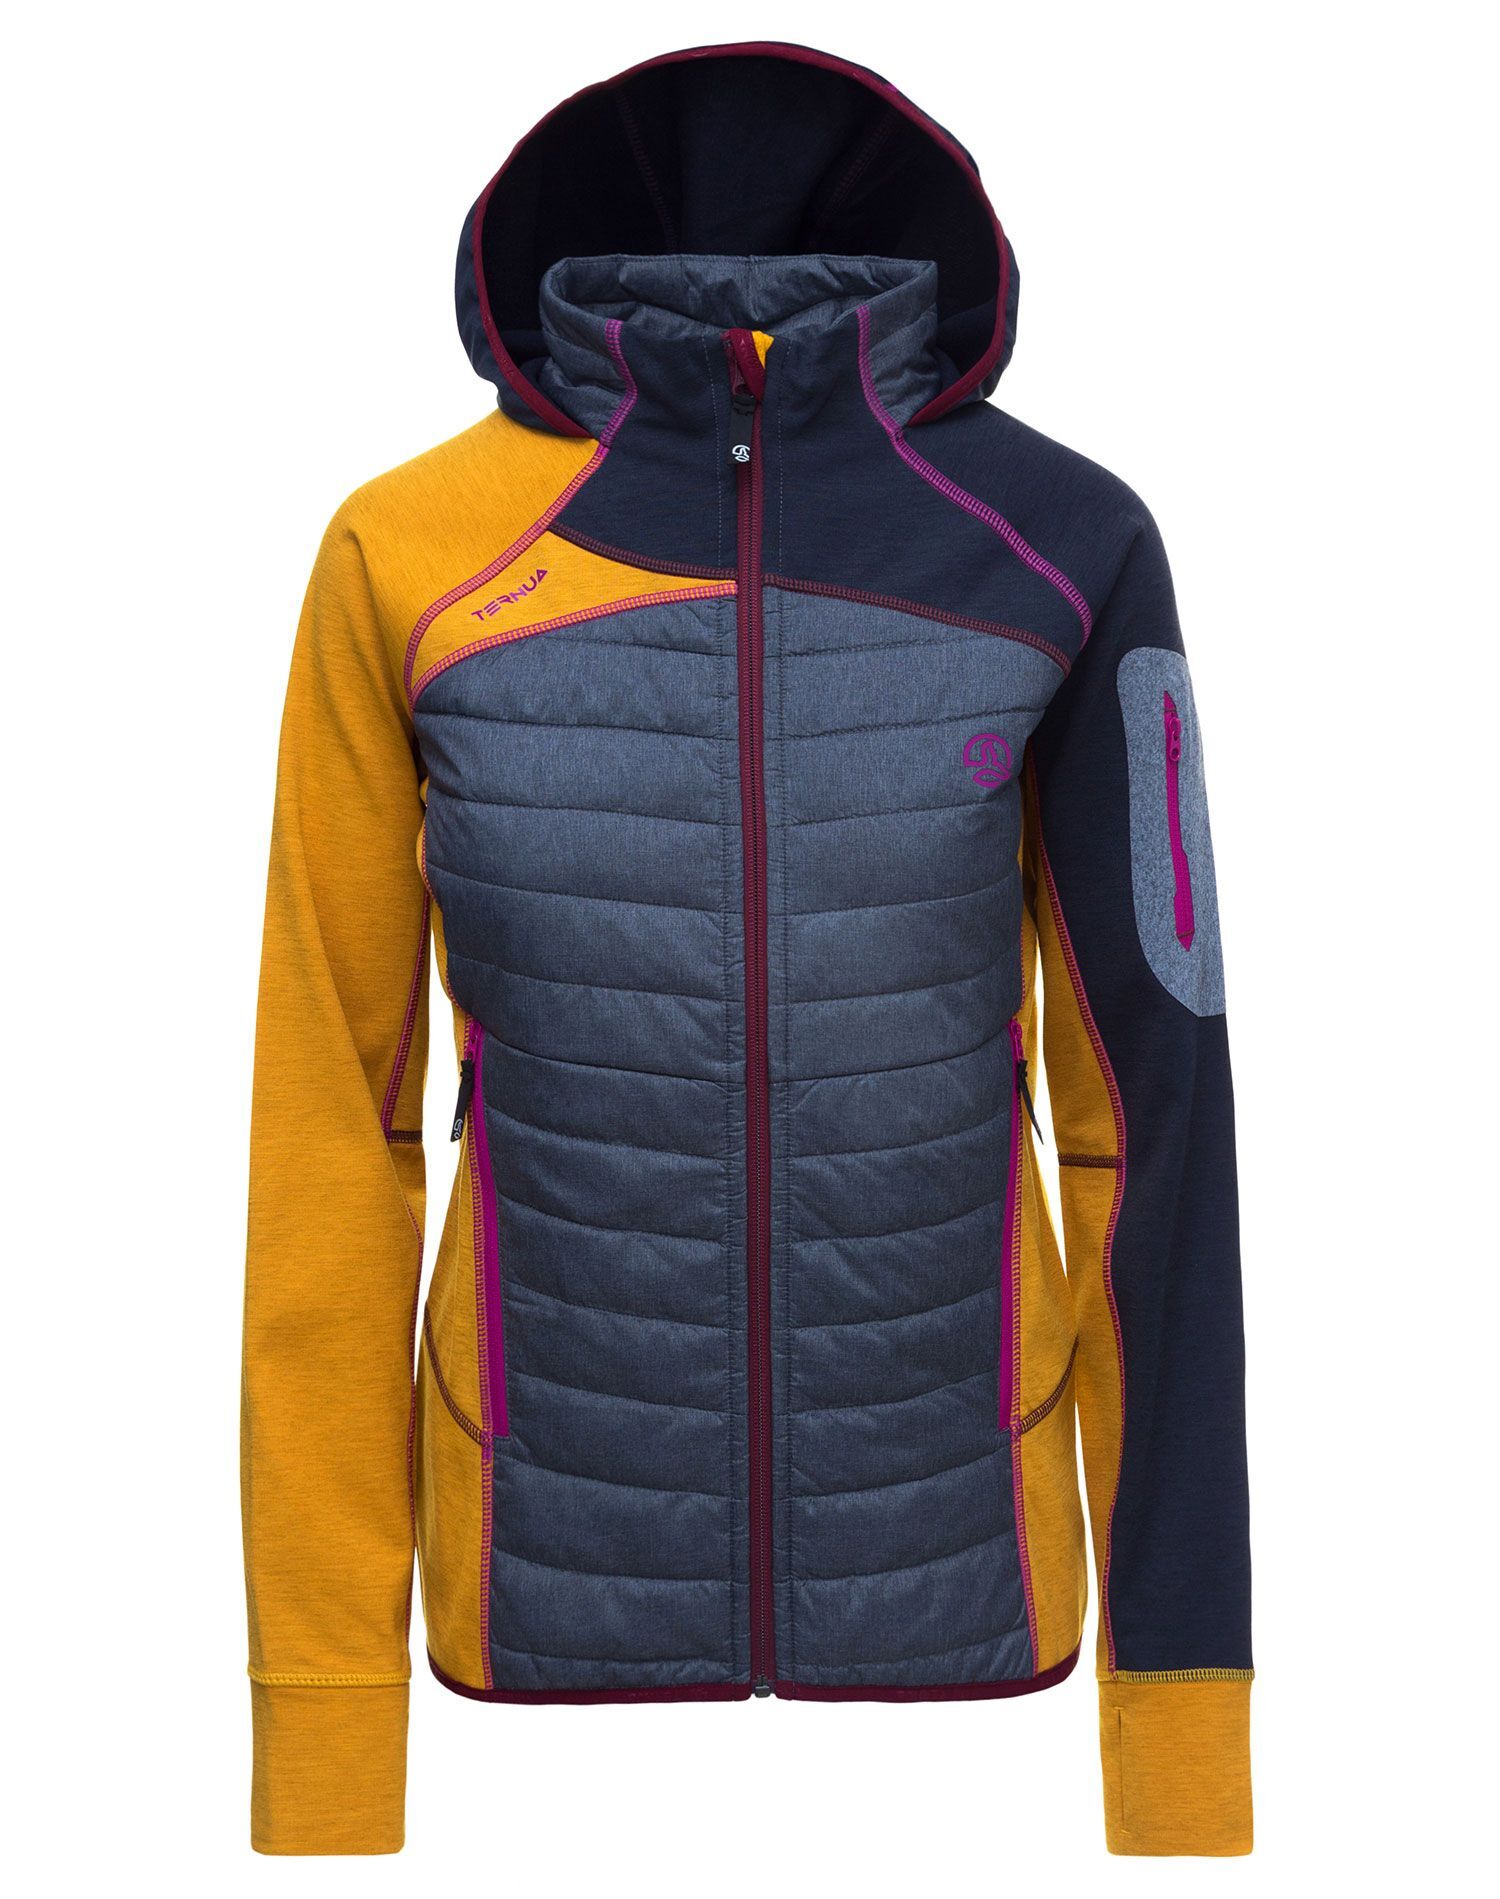 Ternua - Lesha Hybrid Jacket - Insulated jacket - Women's